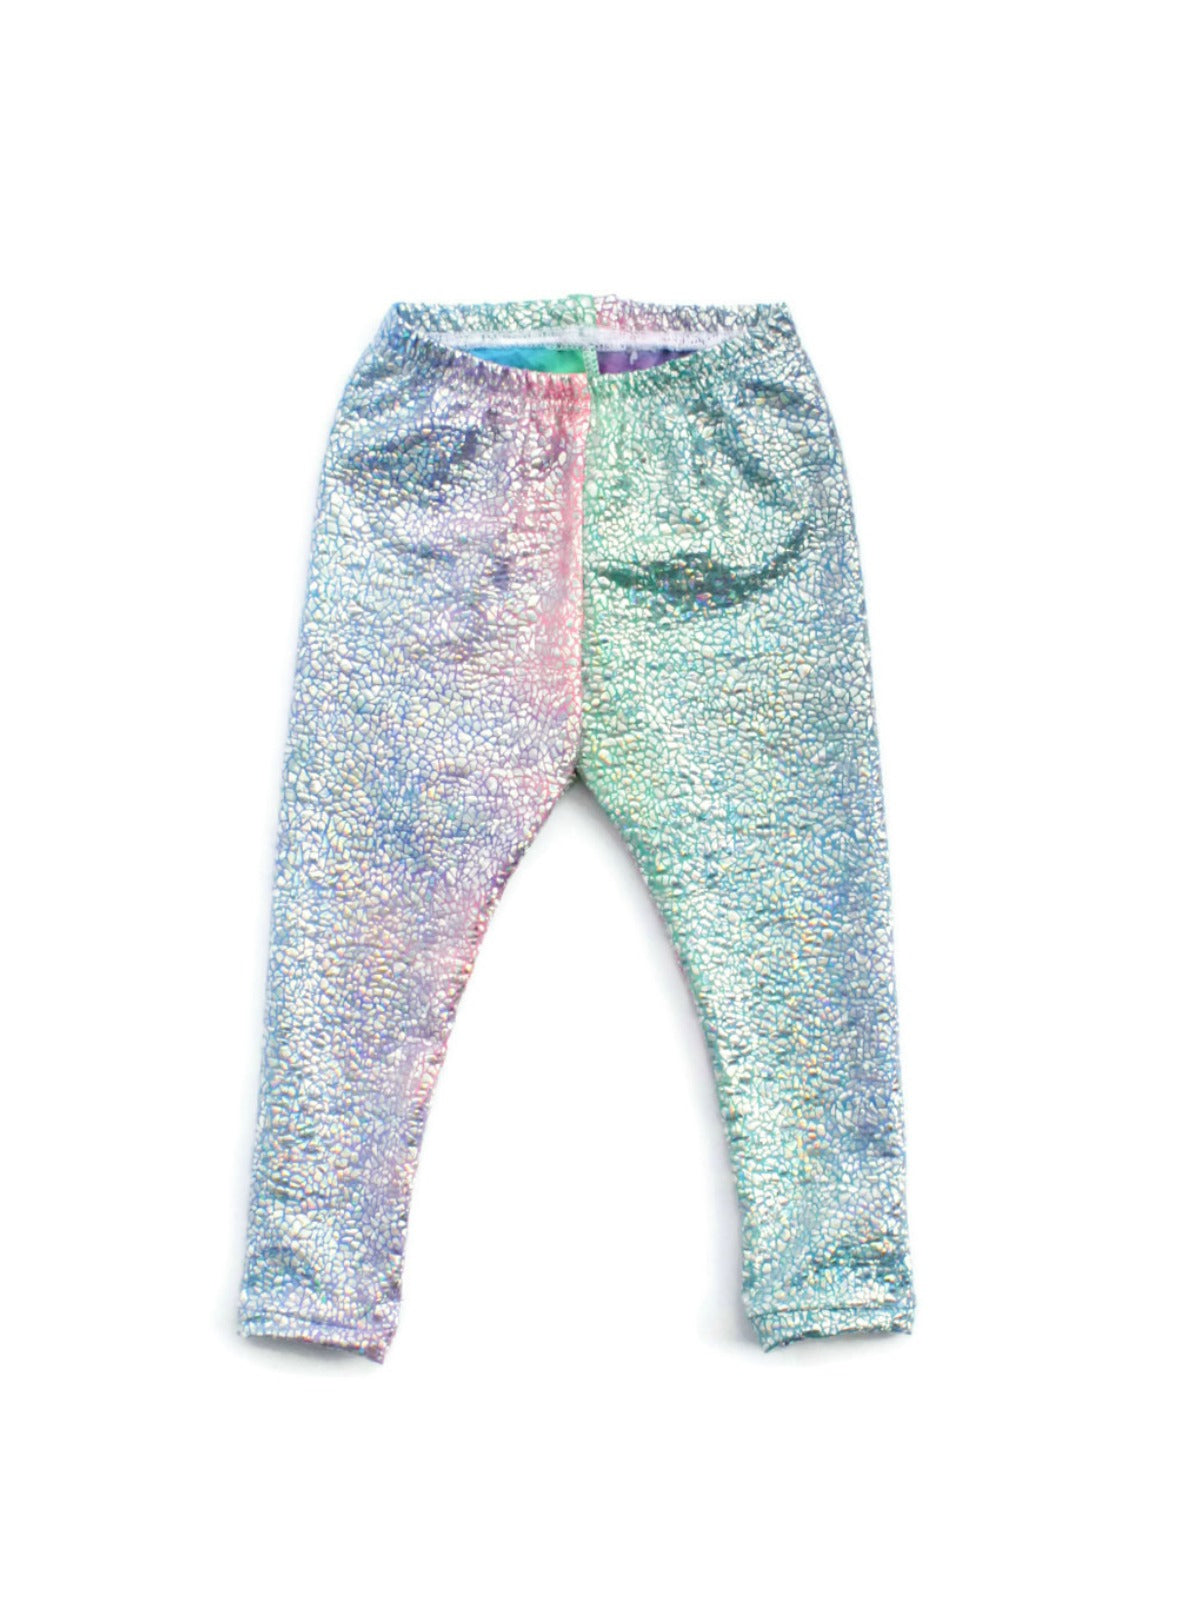 Children's Holograph Rainbow Leggings, Girls Sparkle Pants, Child